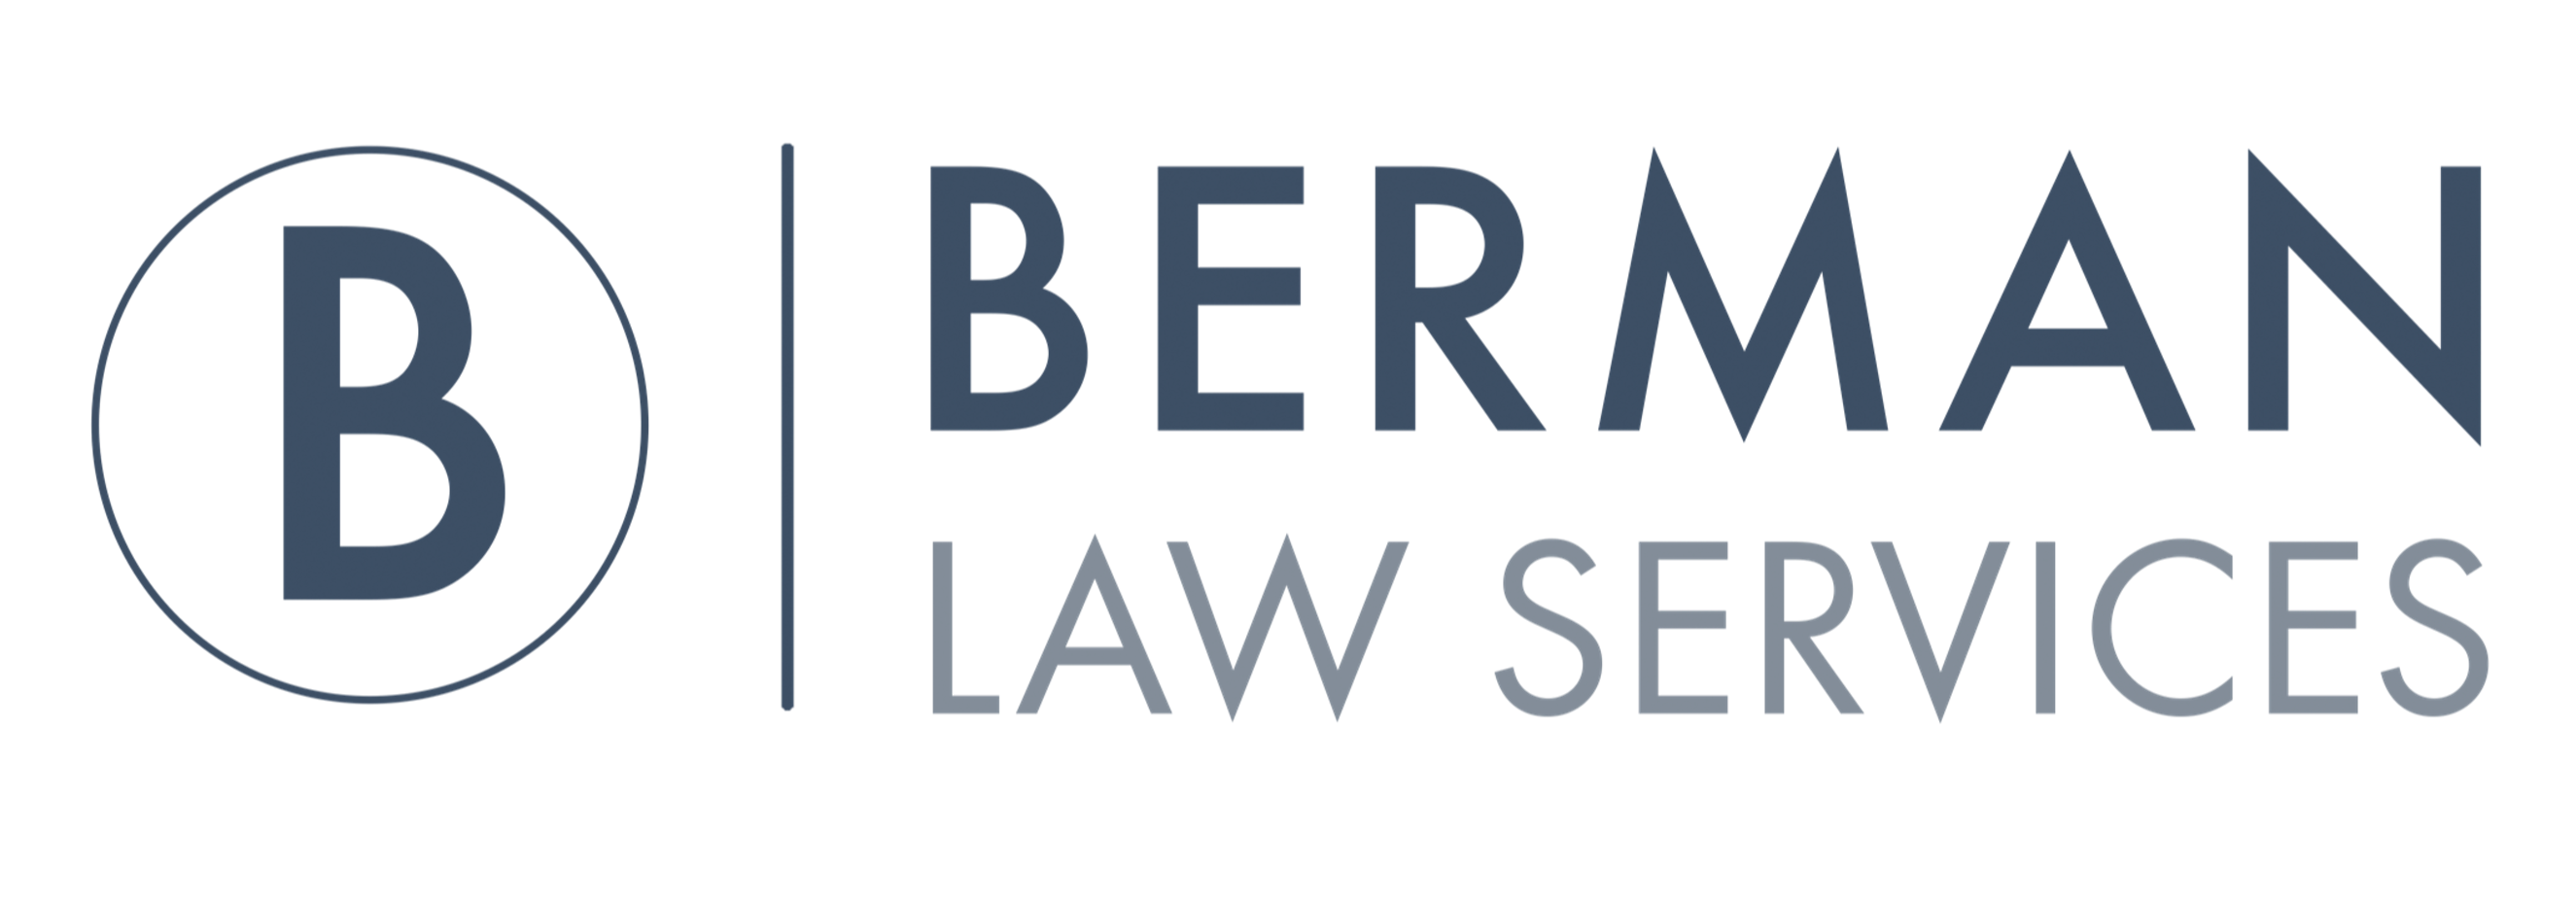 Berman Law Services LLC